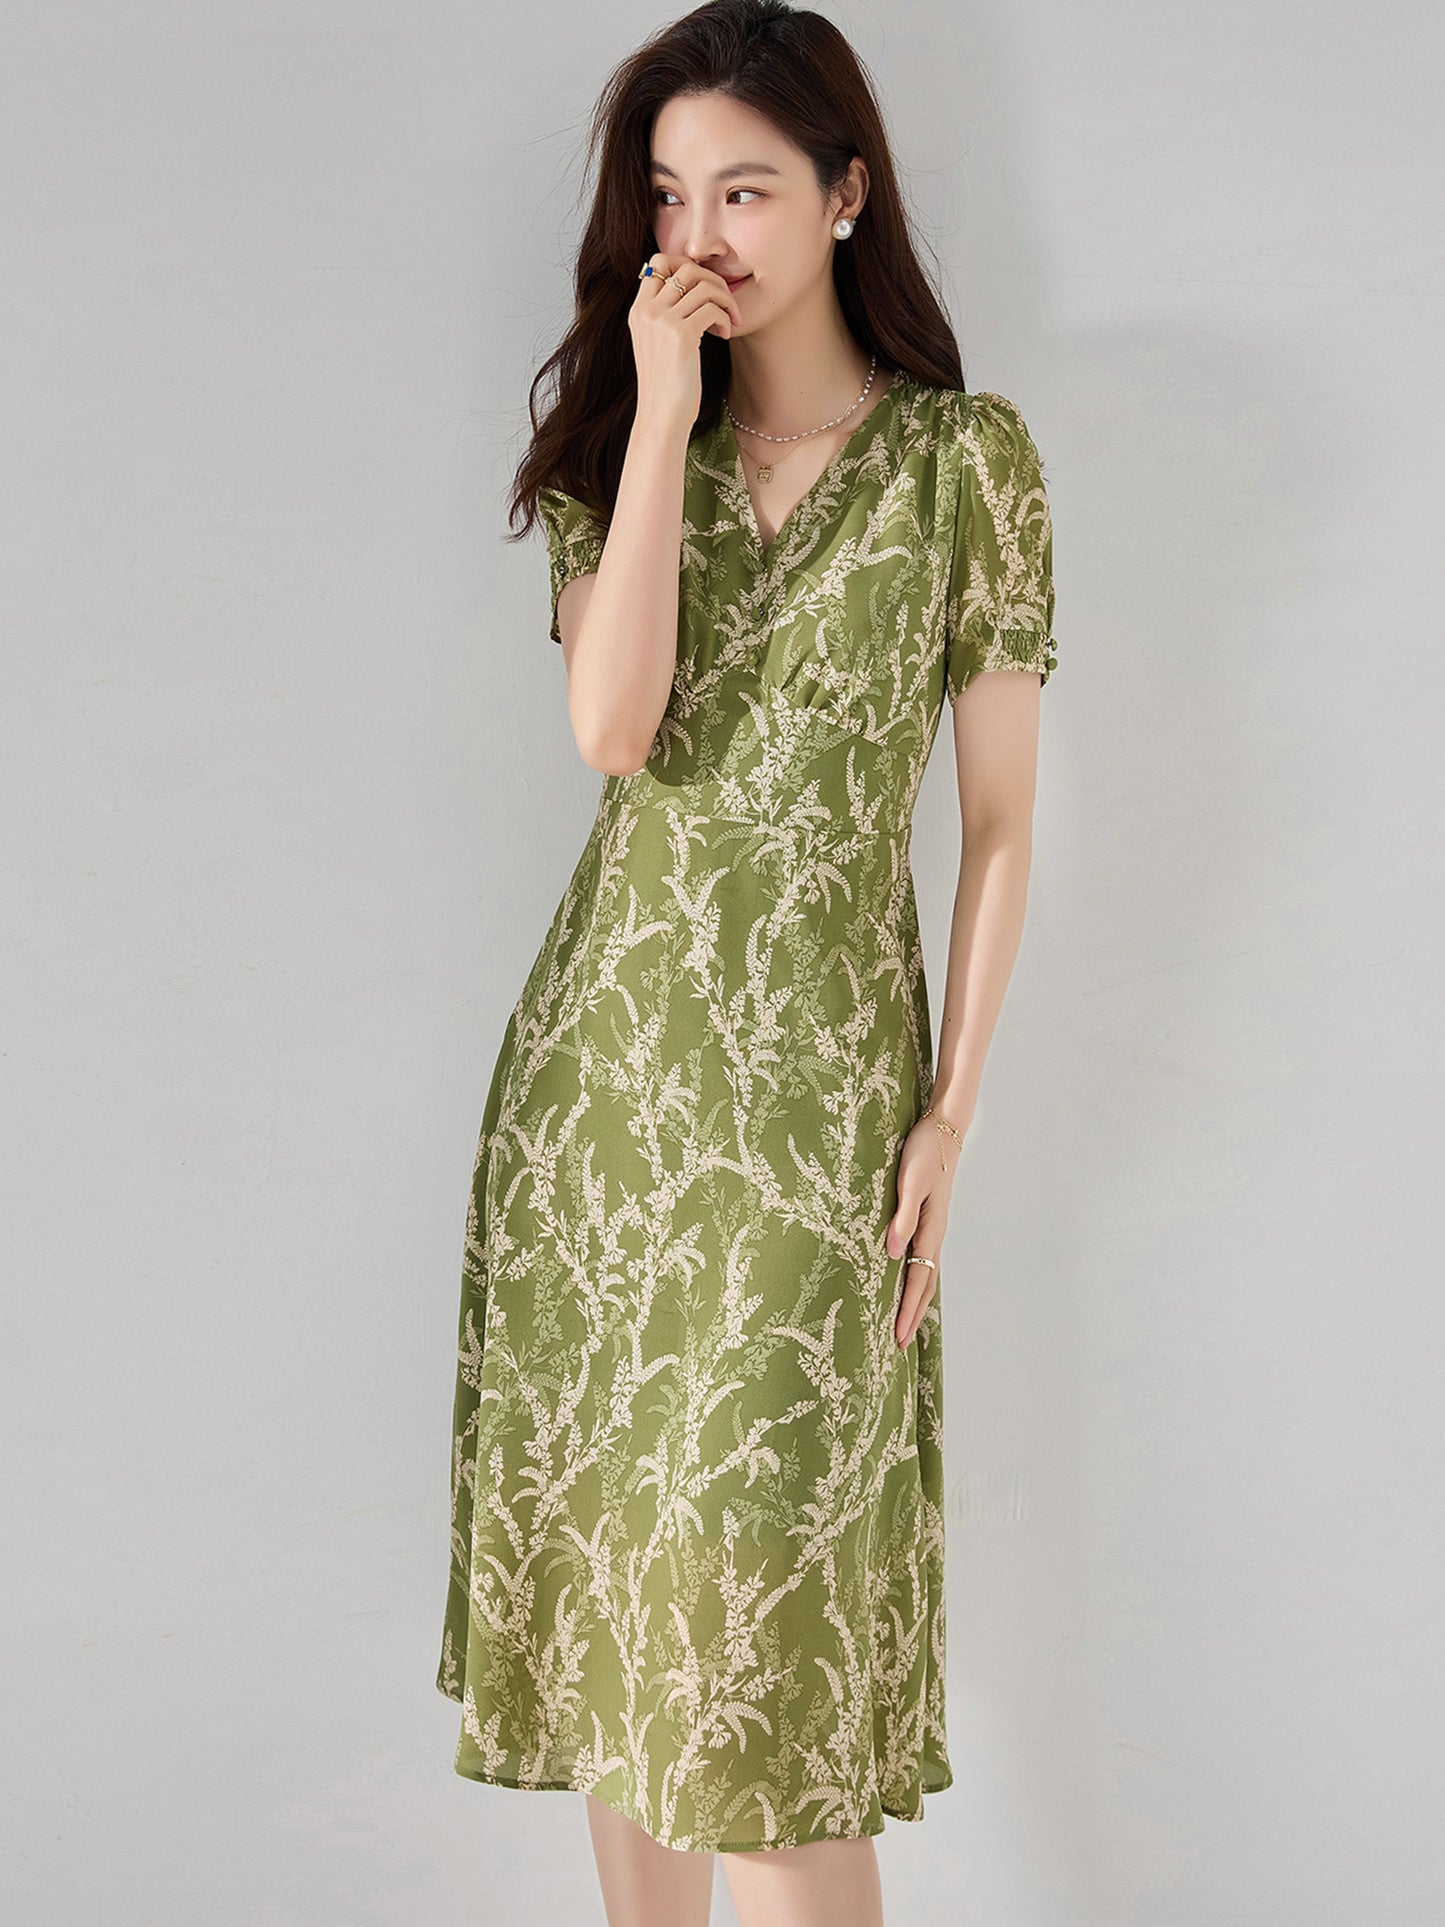 【C&M】Green Printed Dress